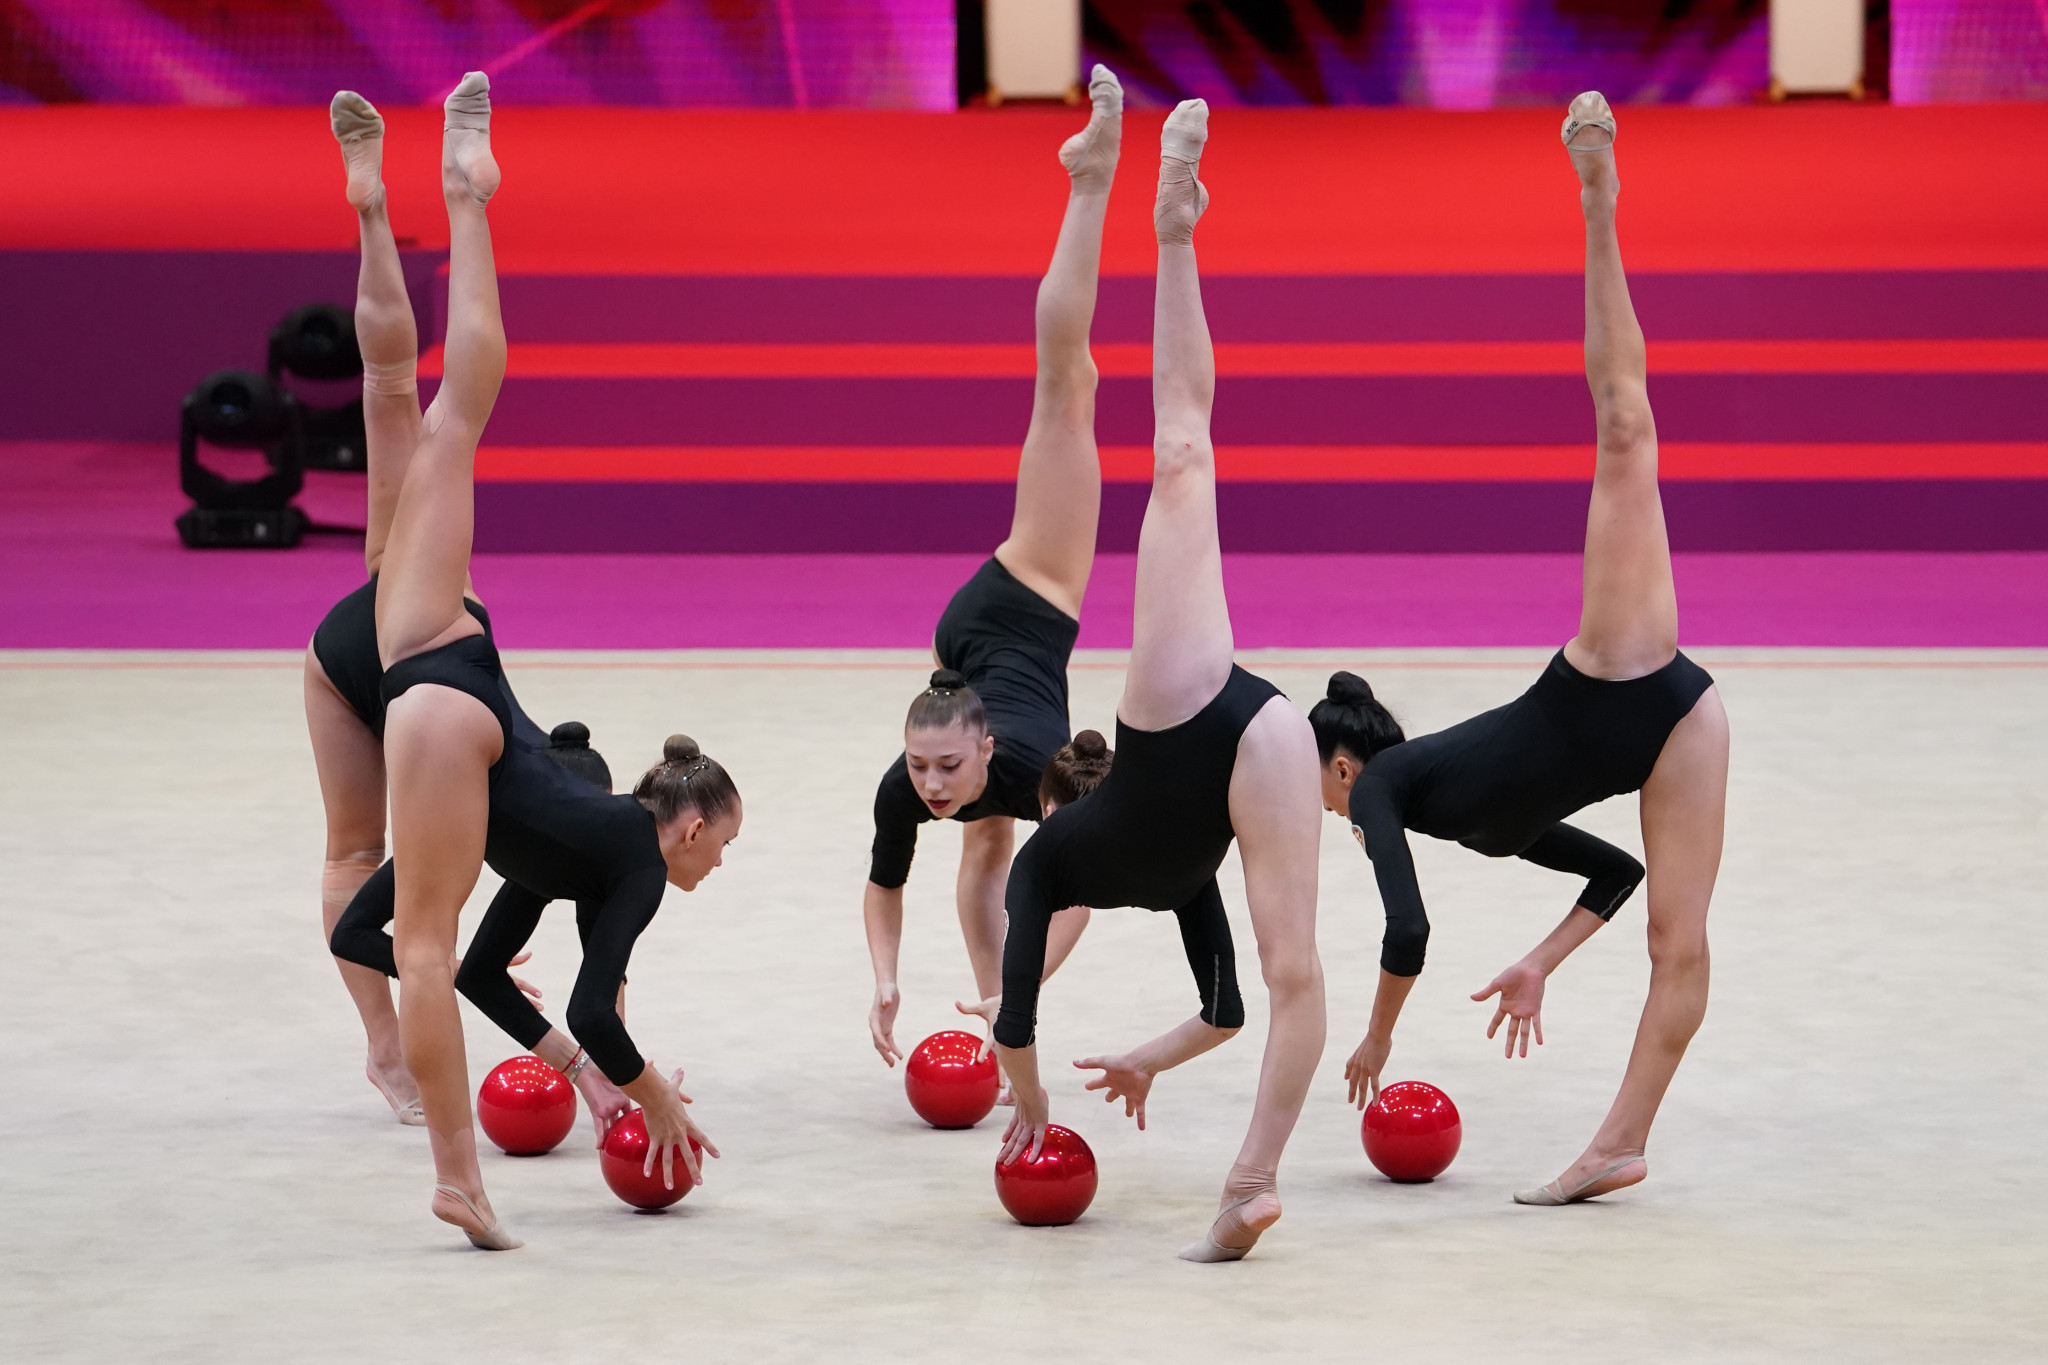 Azerbaijan is set to host next year's European Rhythmic Gymnastics Championships ©Getty Images